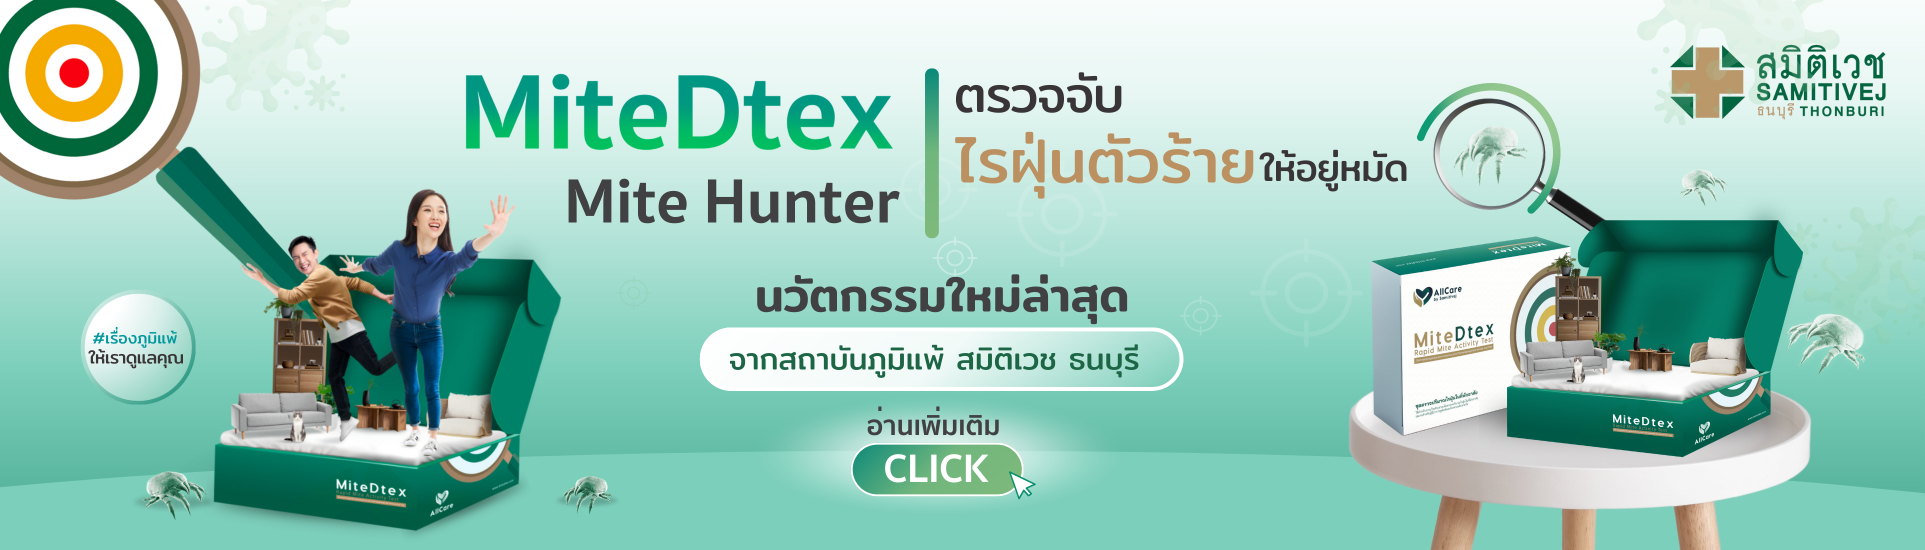 MiteDtex-samitivejthonburi-slide